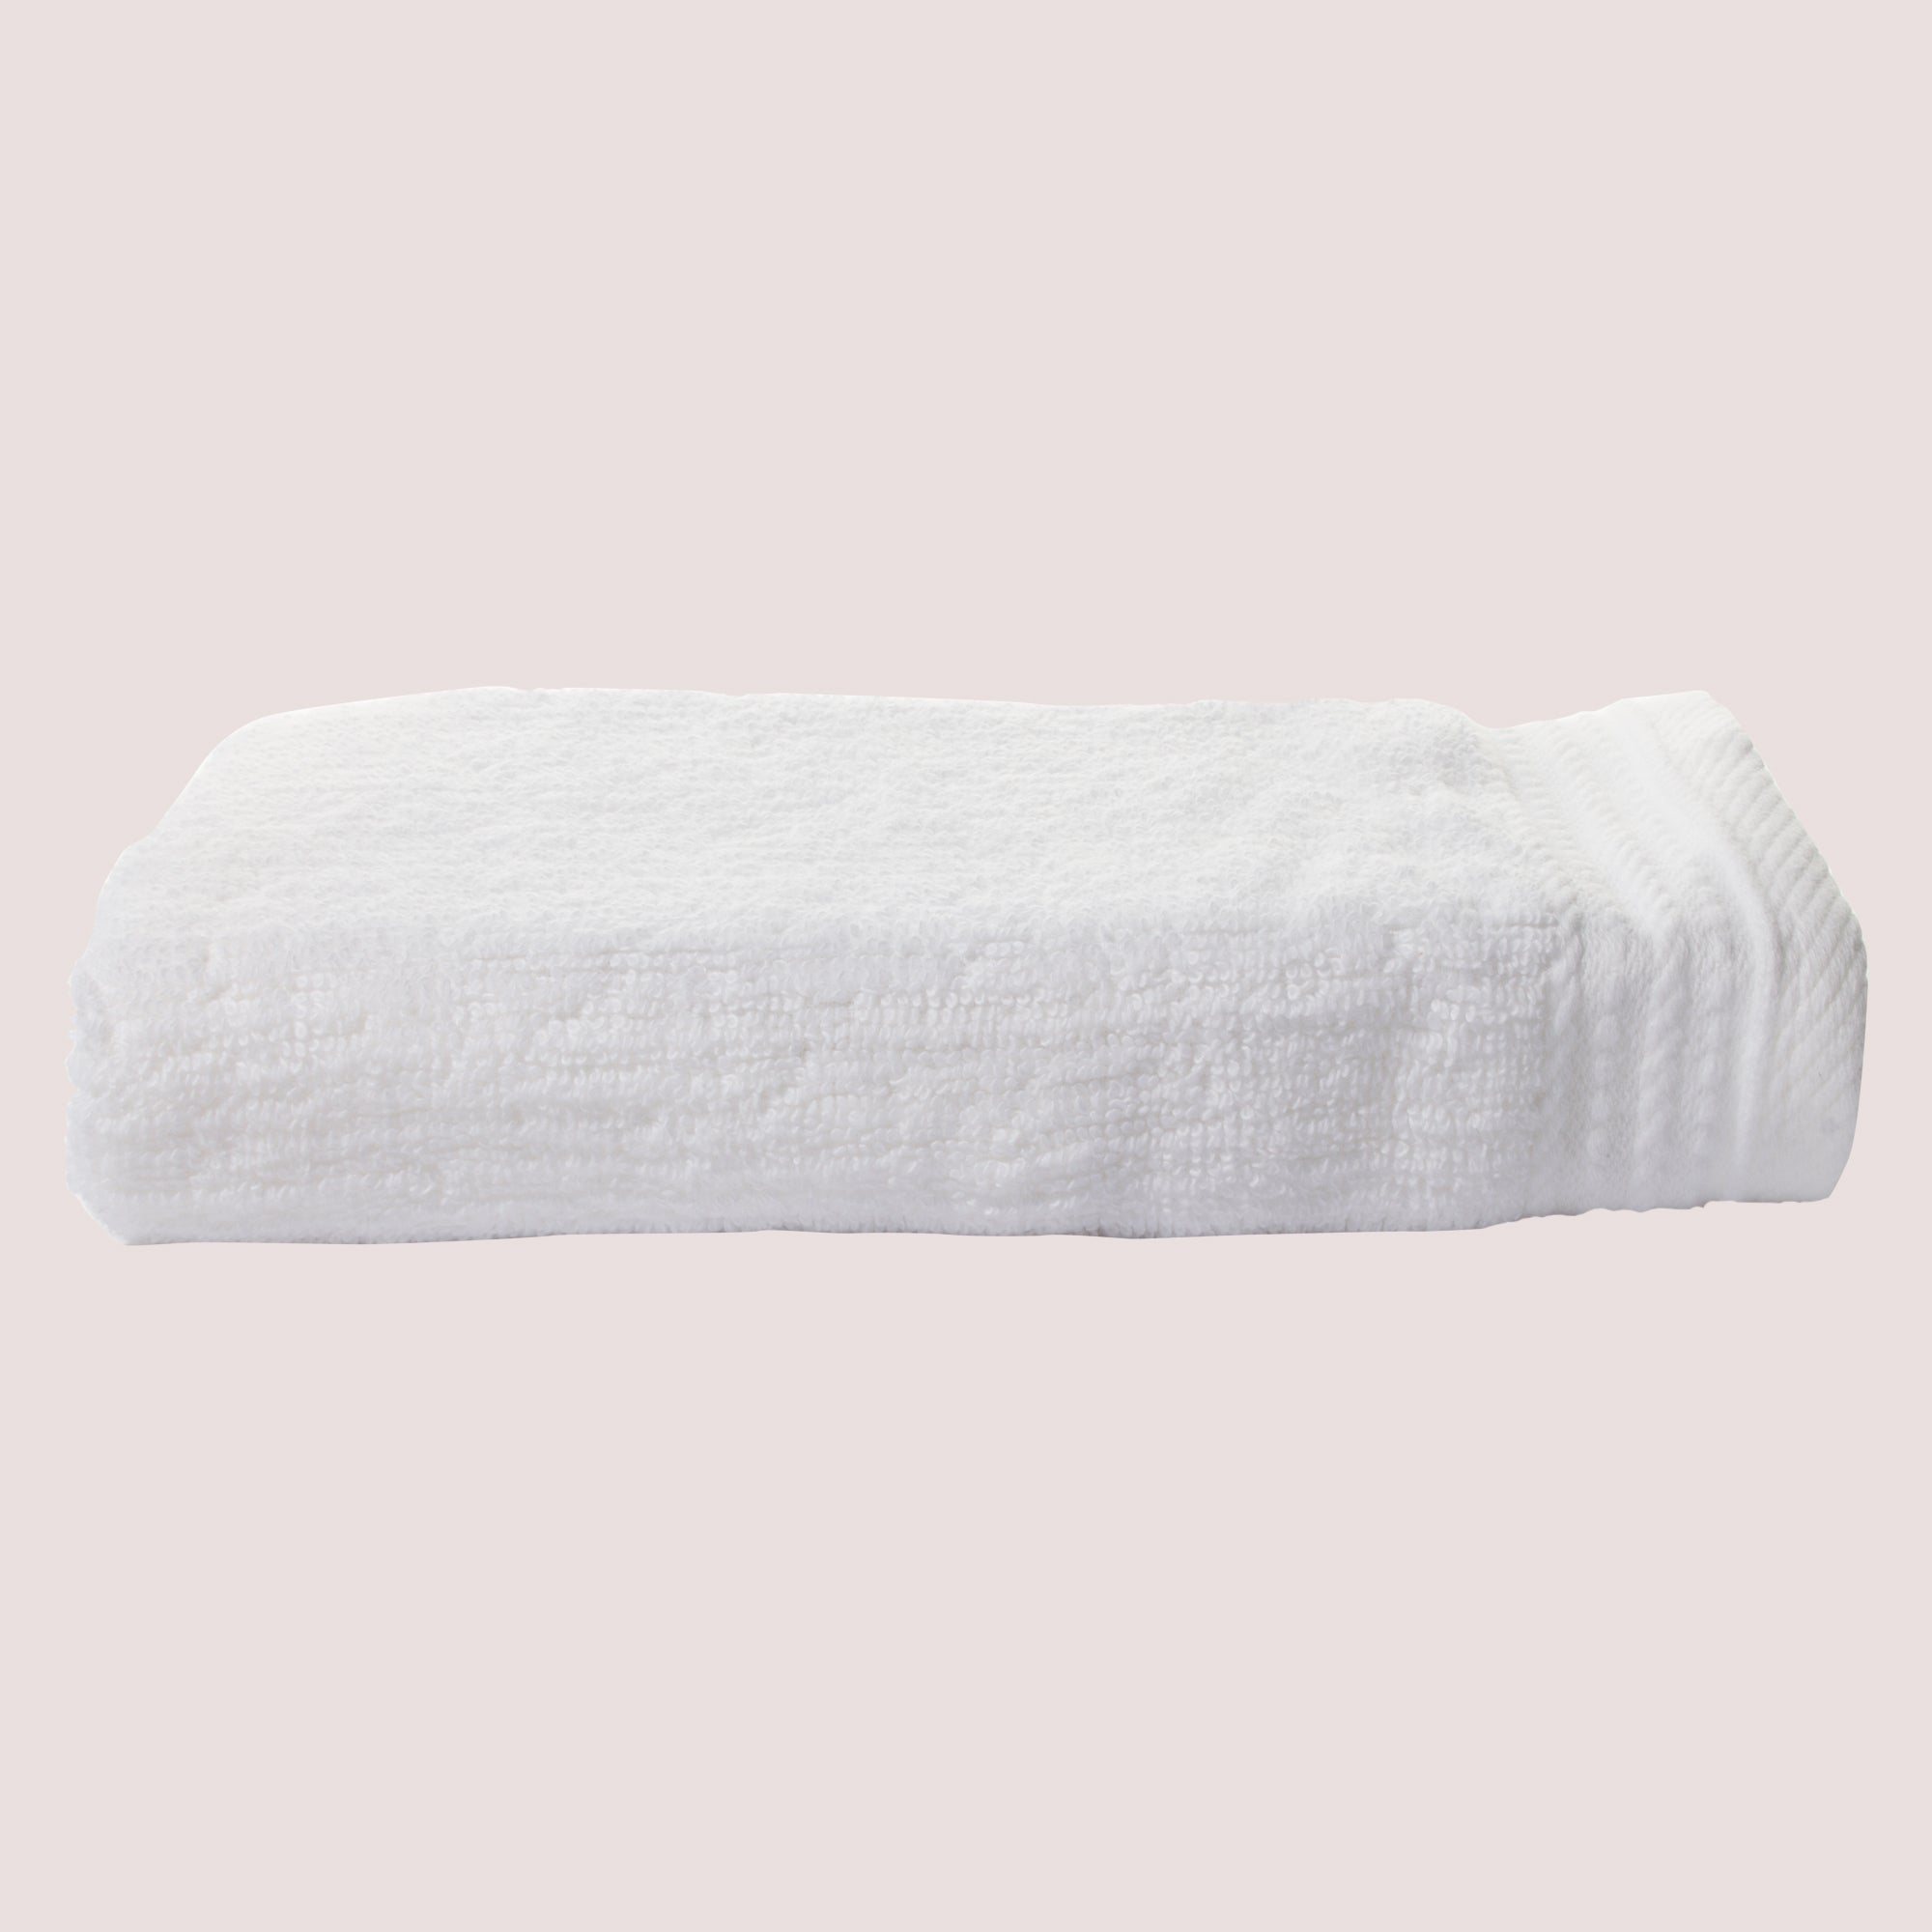 Toalla de baño Imperial 100% algodón 450 gramos blanca